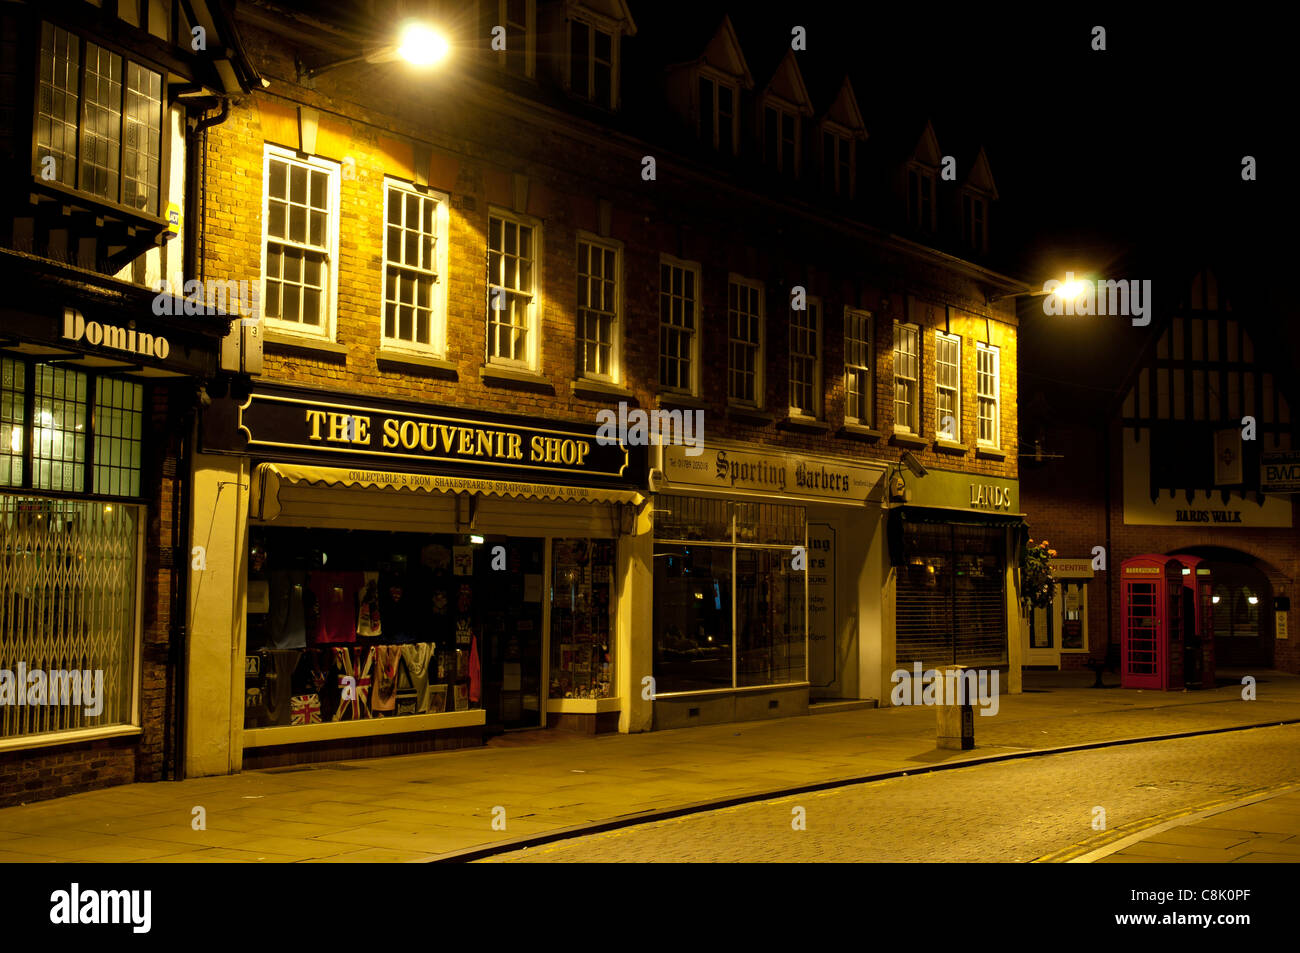 Shops at night in Henley Street, Stratford-upon-Avon, England, UK Stock Photo